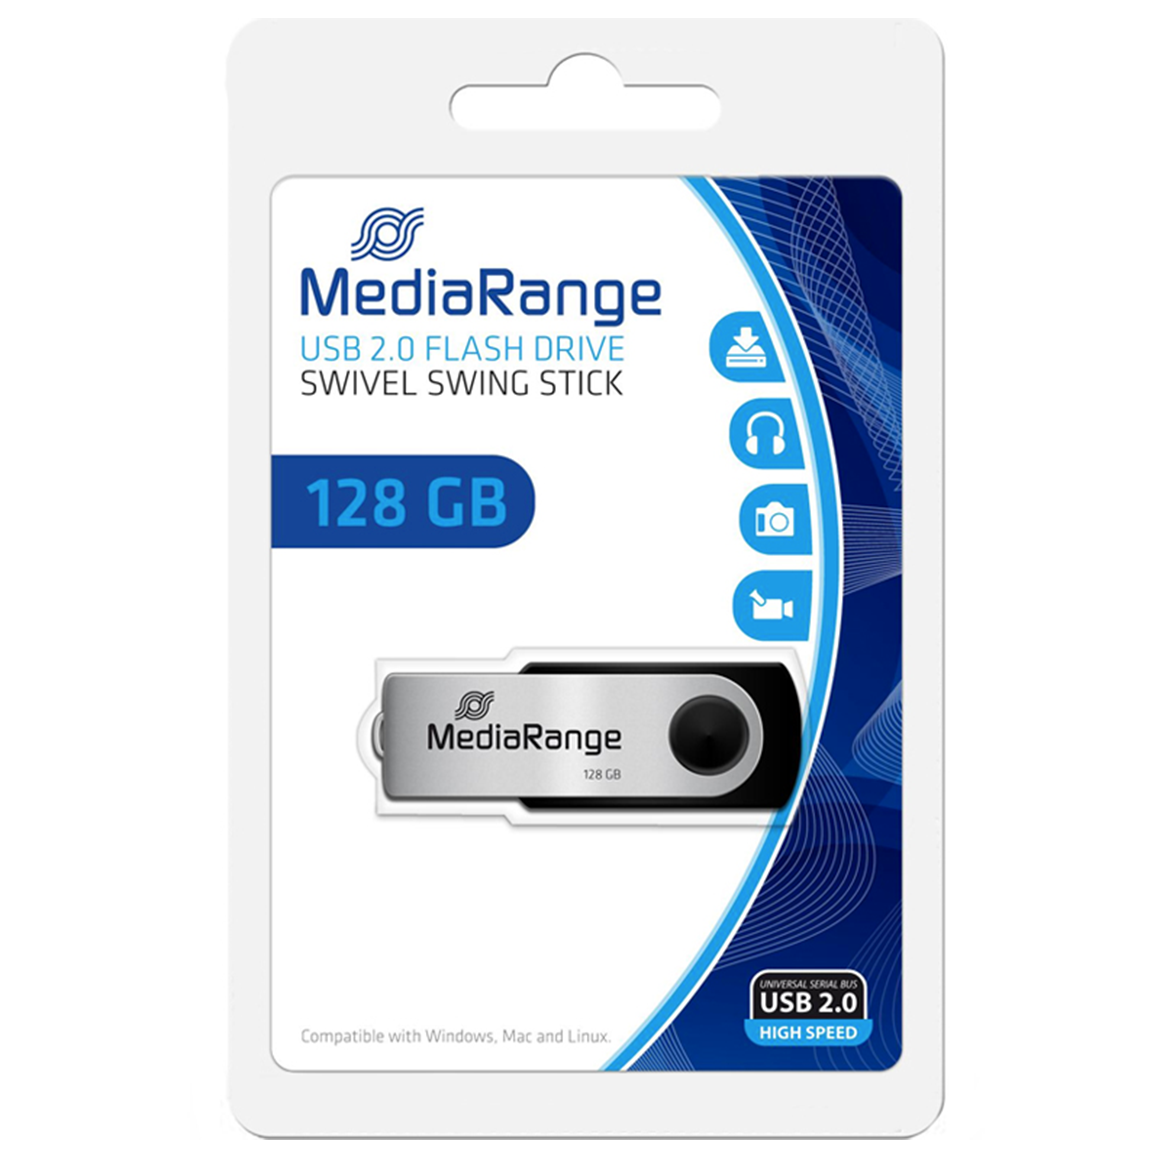 MediaRange USB 2.0 Flash Drive, 128 GB